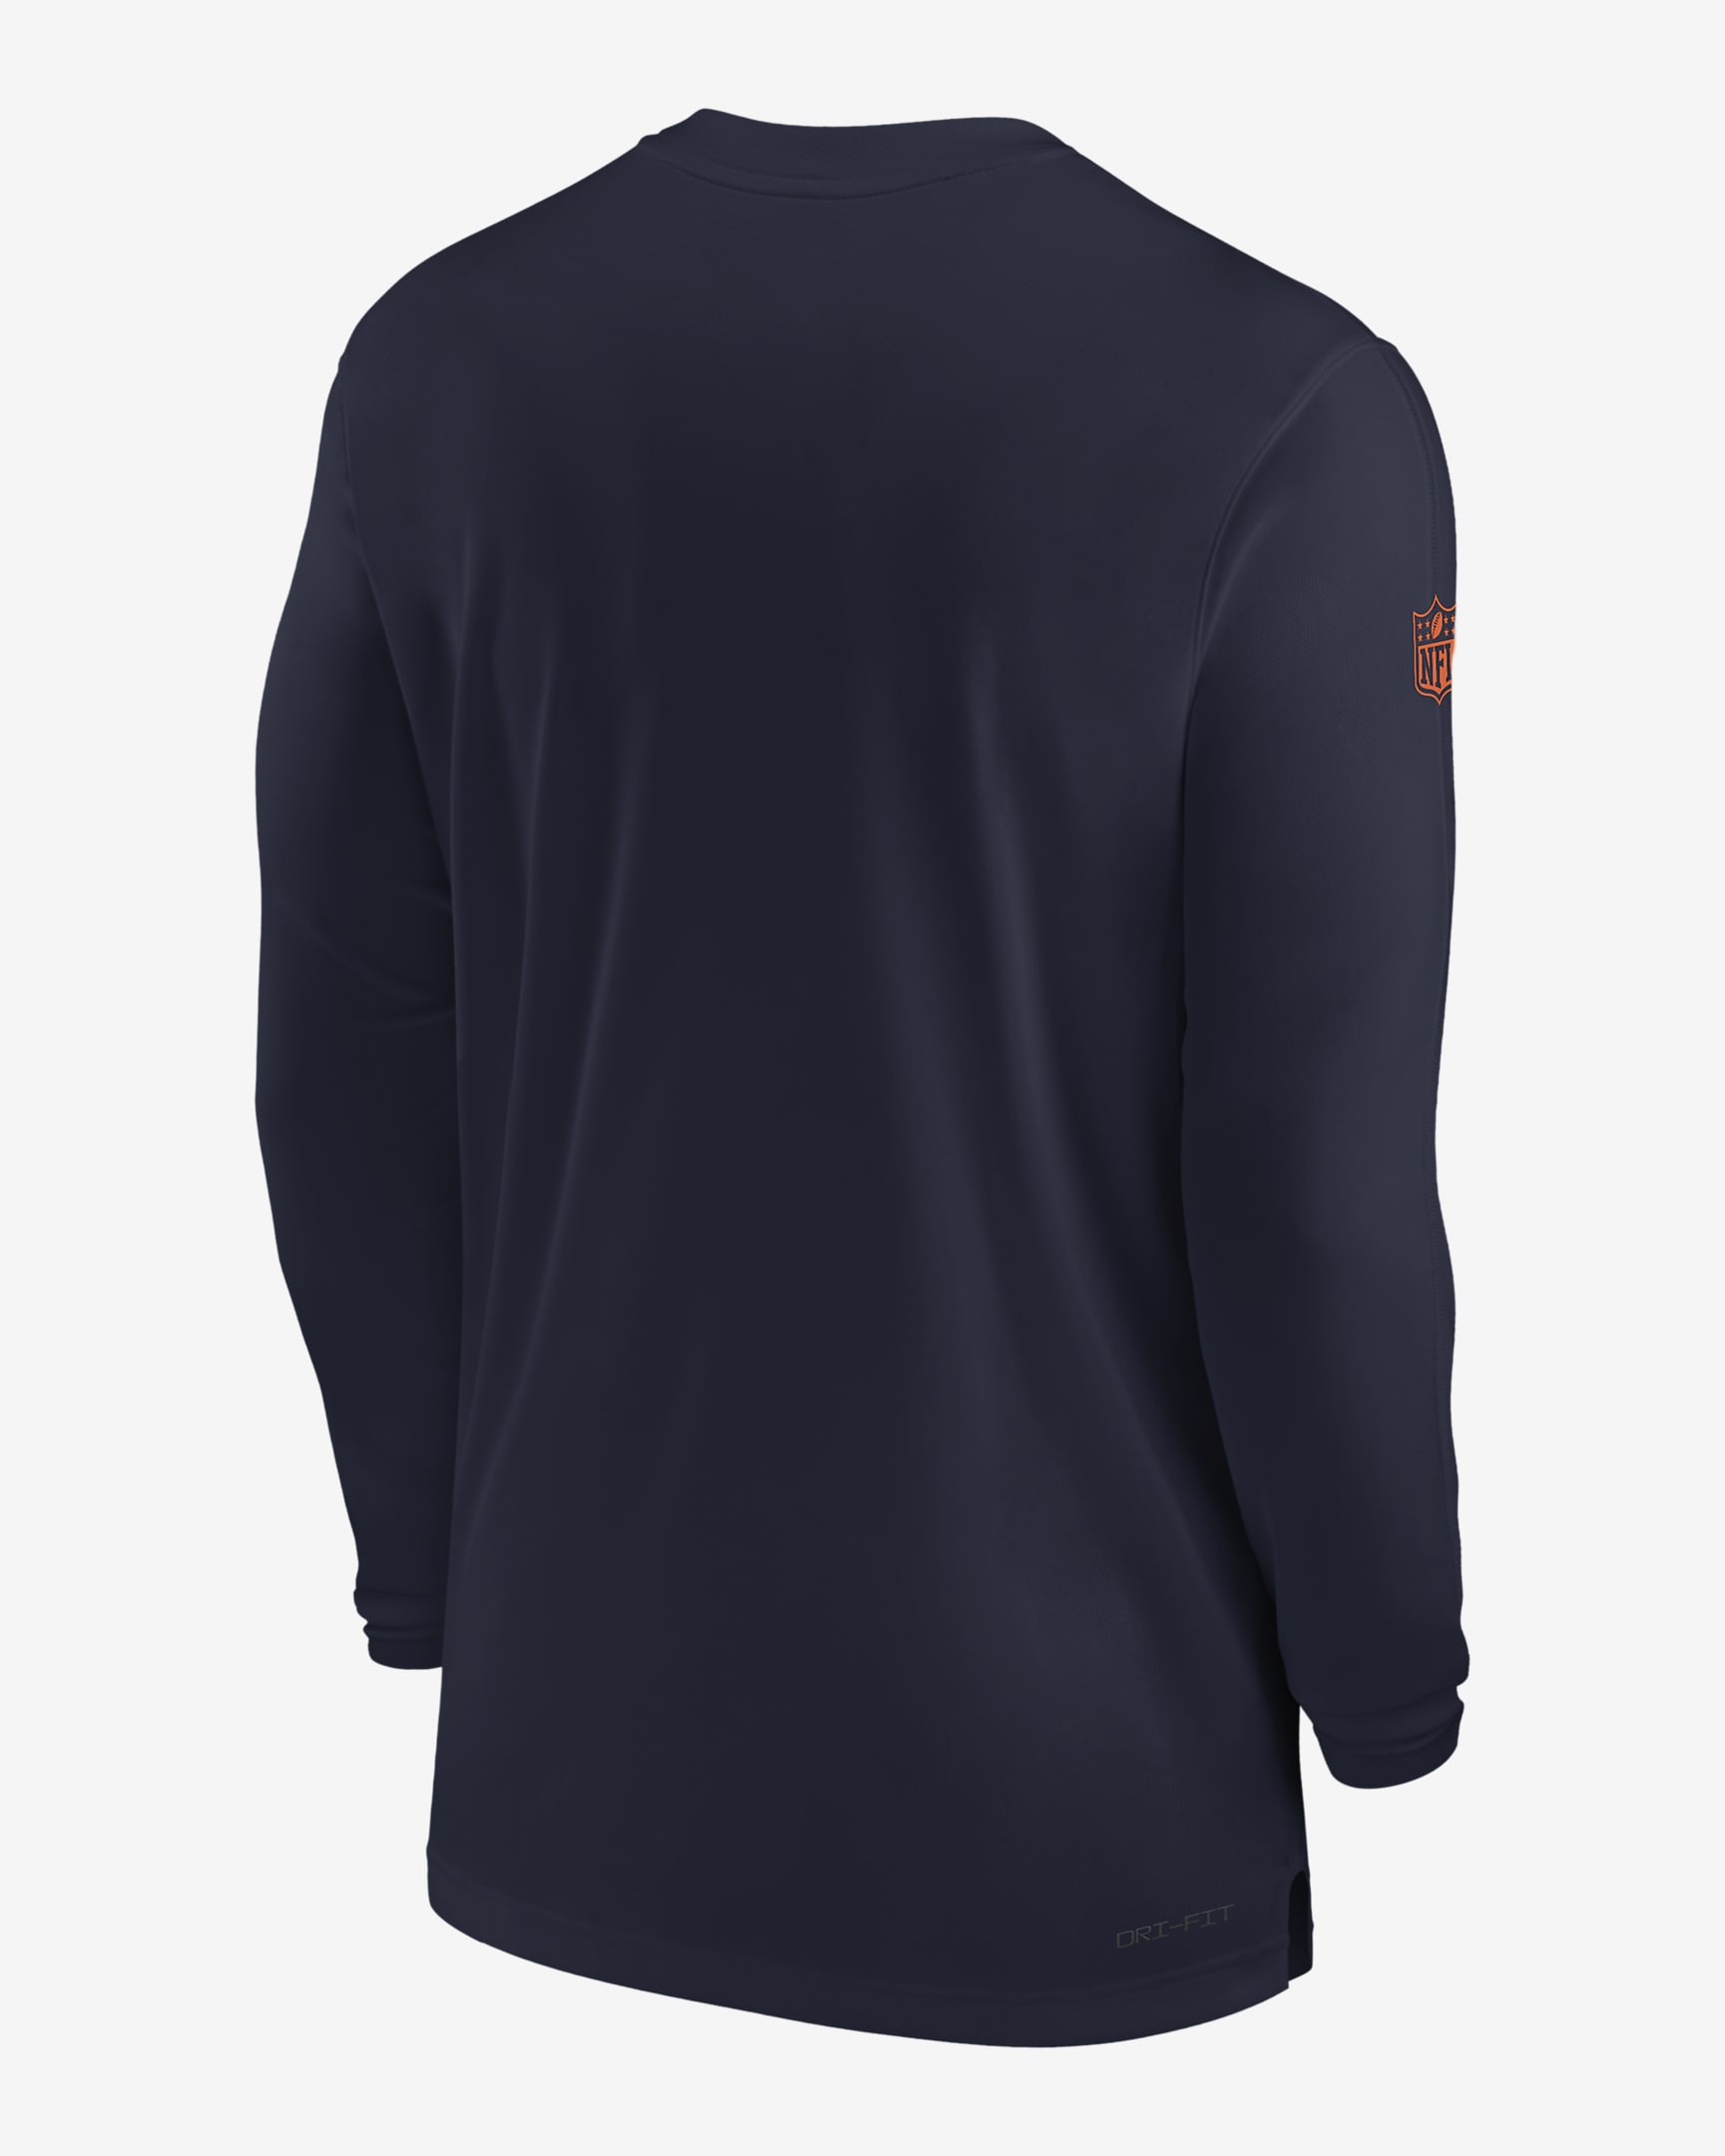 Nike Dri-FIT Sideline Coach (NFL Denver Broncos) Men's Long-Sleeve Top ...